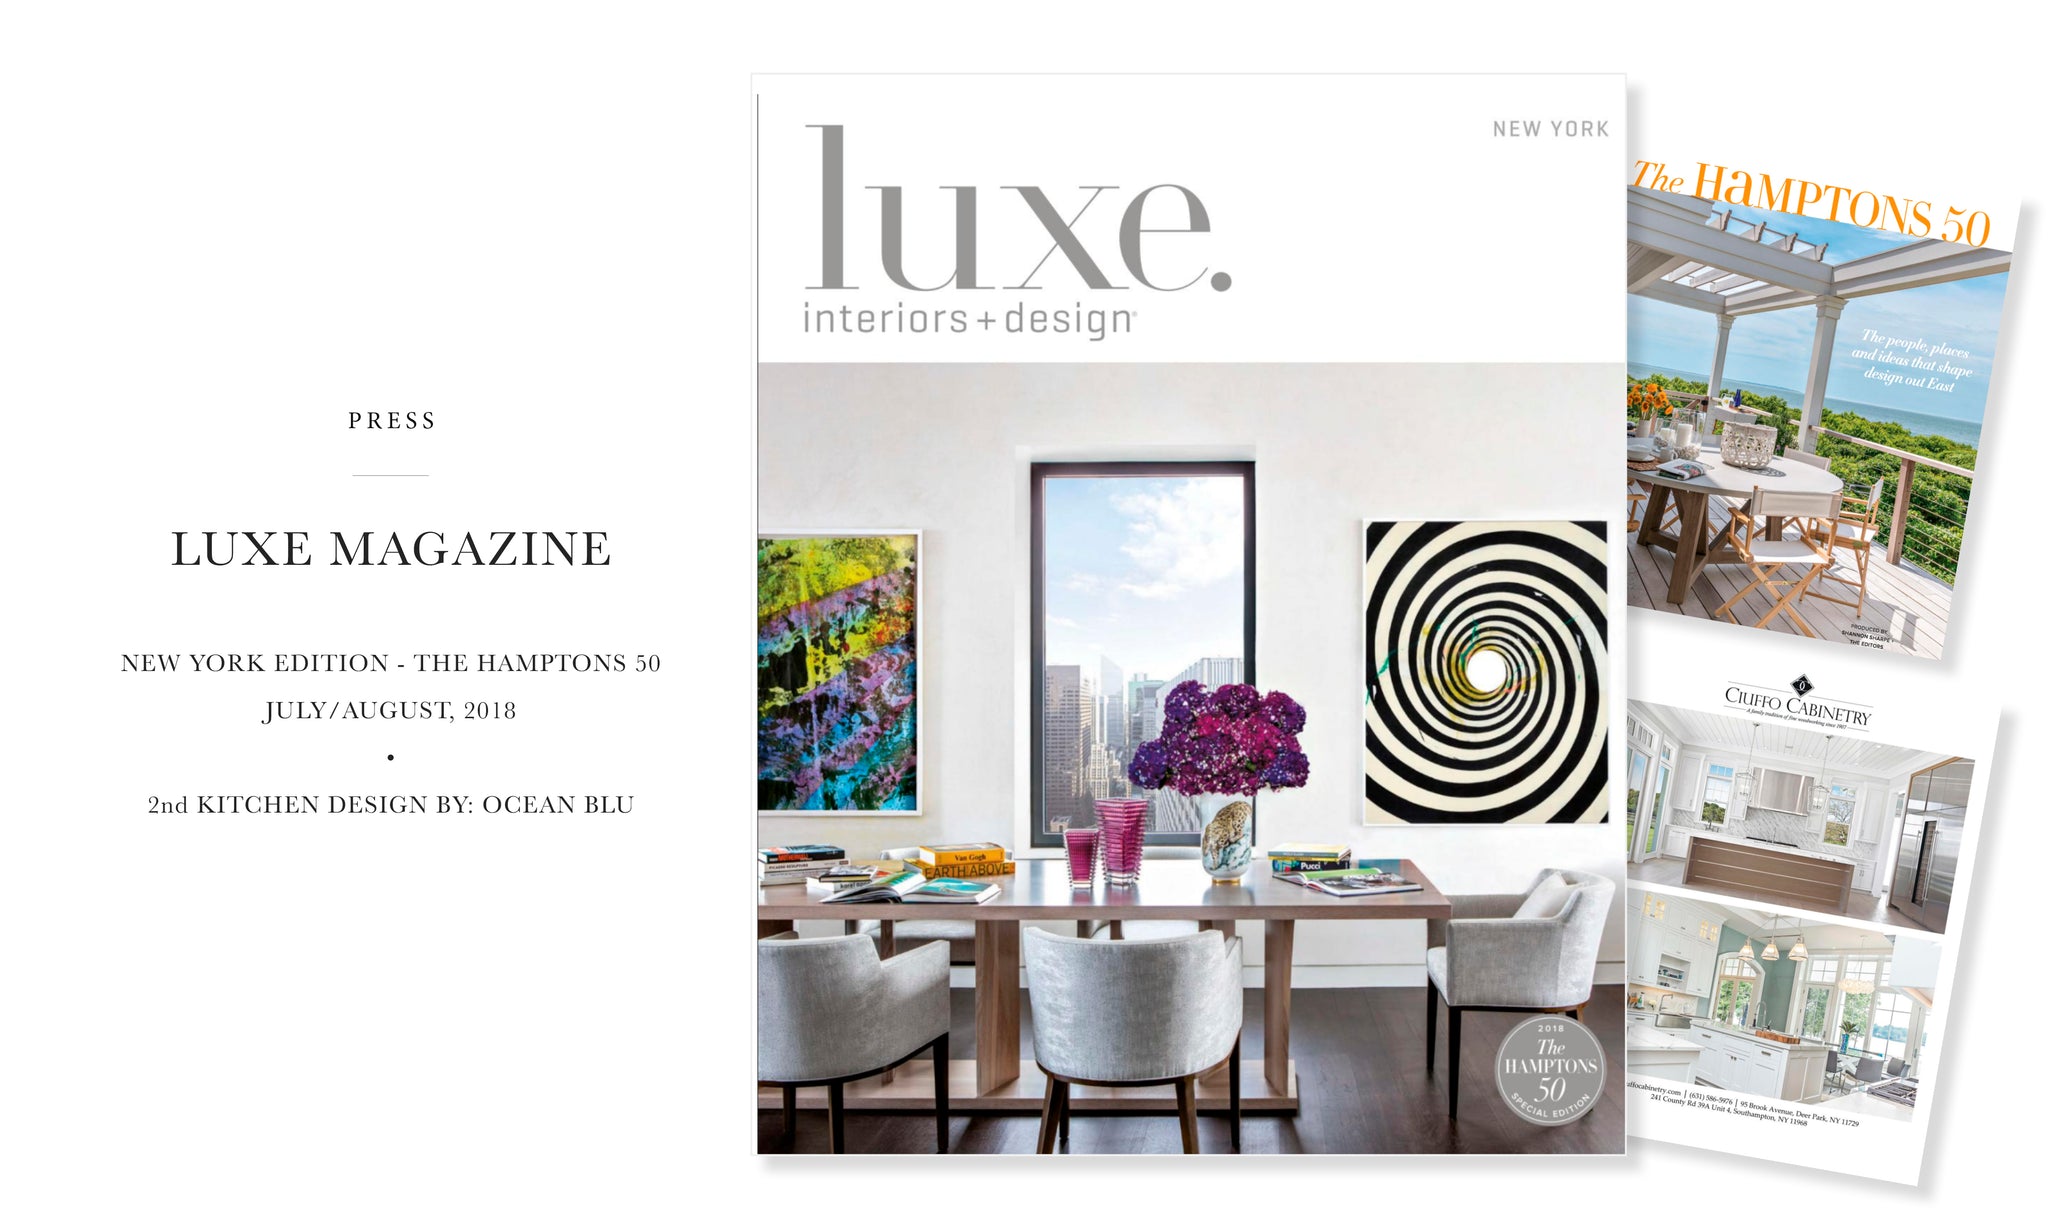 Ocean Blu Designs - Long Island's Best Modern Coastal Interior Design Services - Featured in Luxe Magazine, New York Edition, Hamptons 50